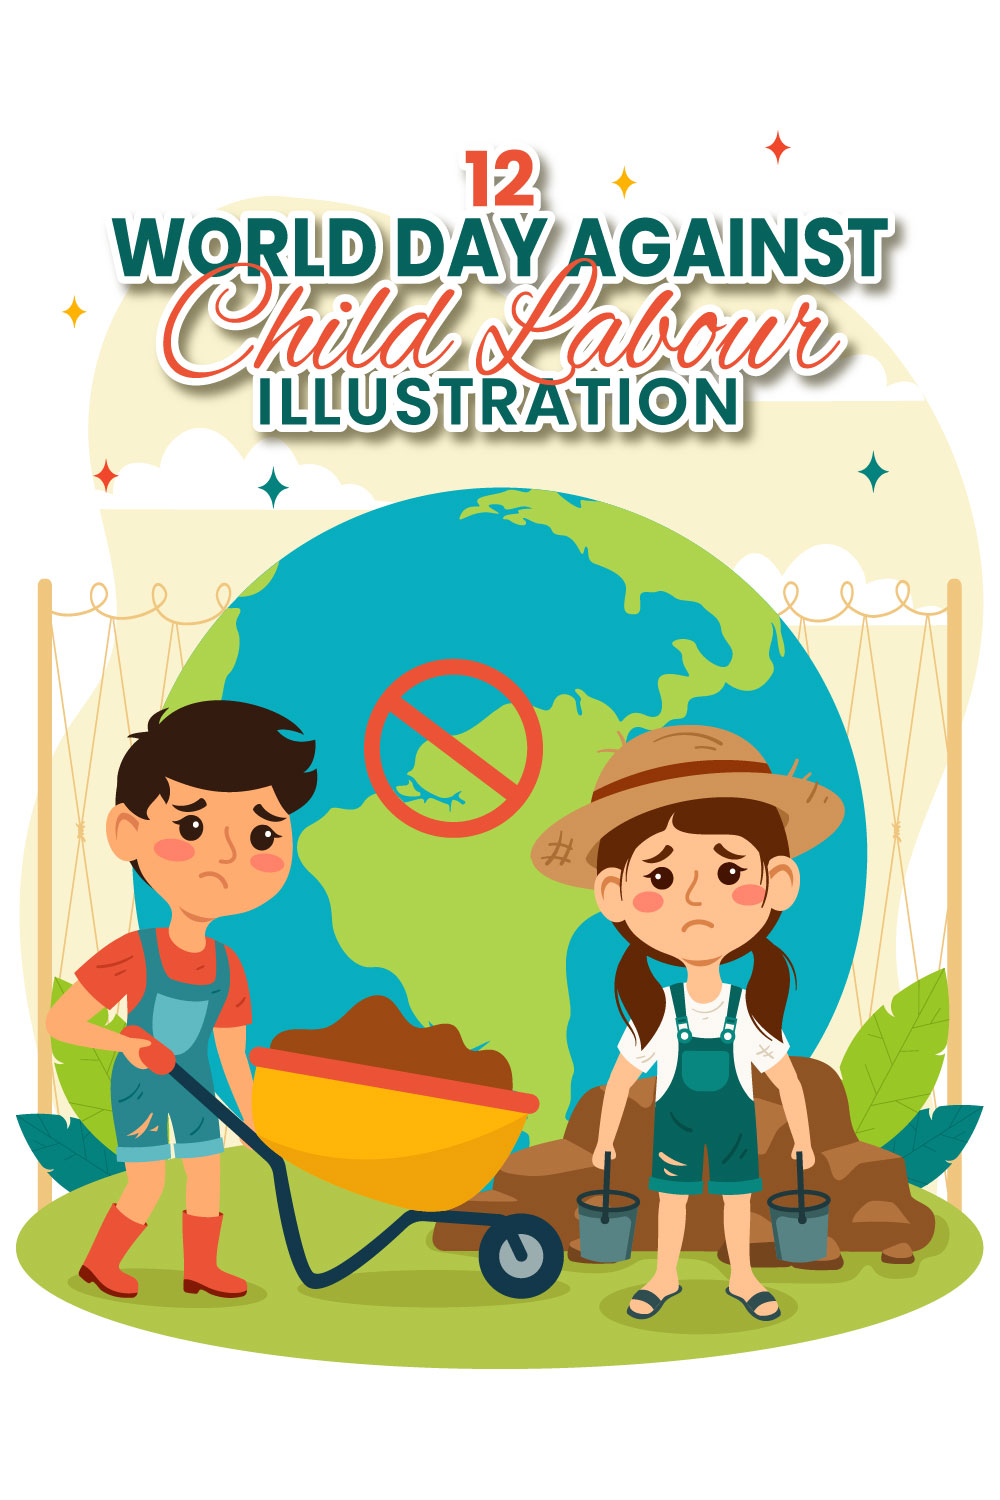 12 World Day Against Child Labour Illustration pinterest preview image.